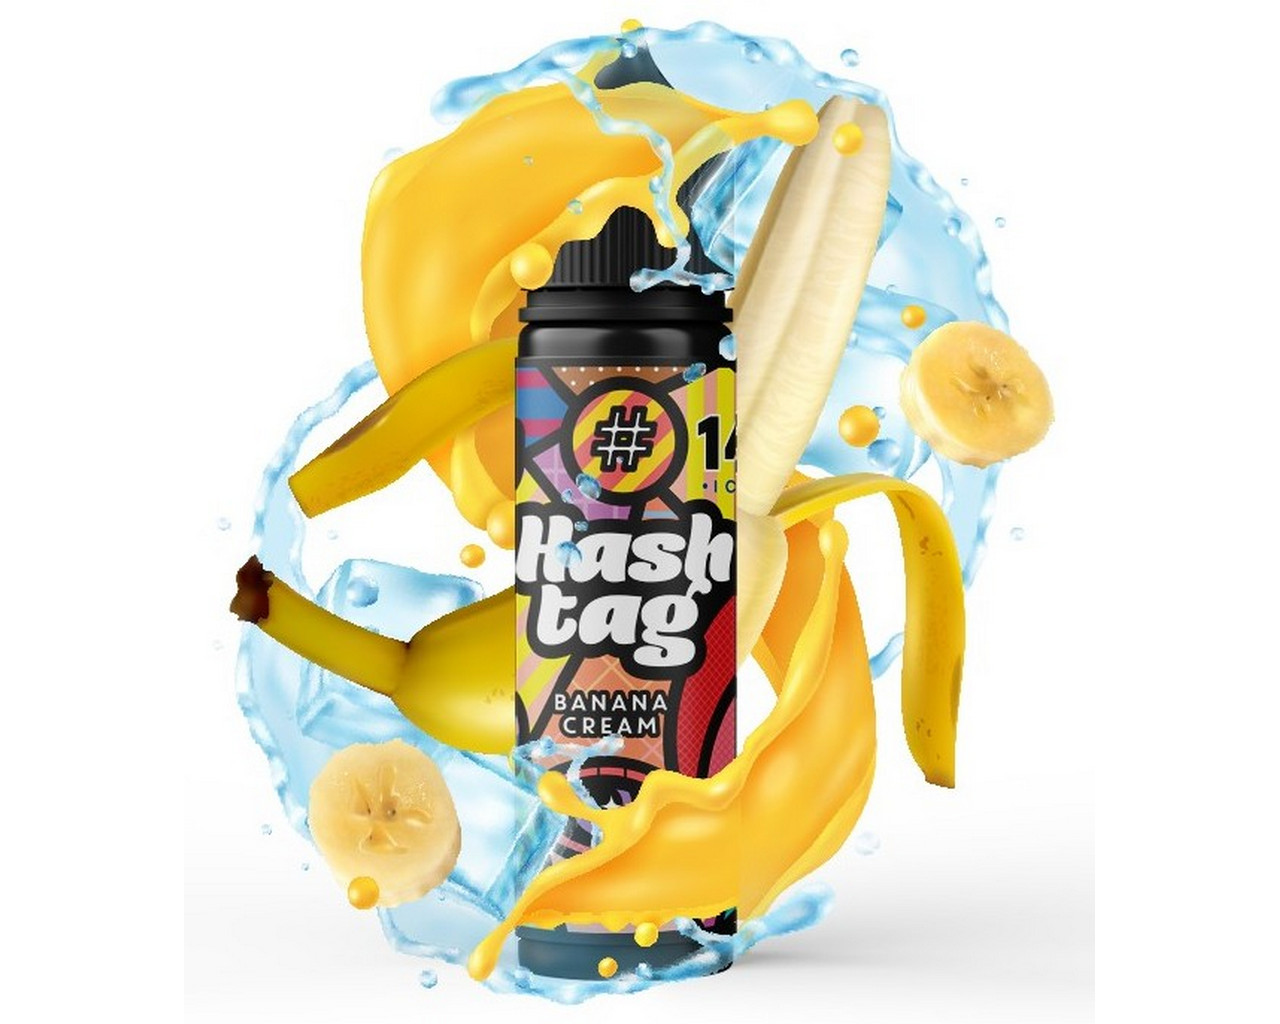 Hashtag Flavorshot Banana Cream Ice 12/60mlHashtag Flavorshot Banana Cream Ice 12/60ml